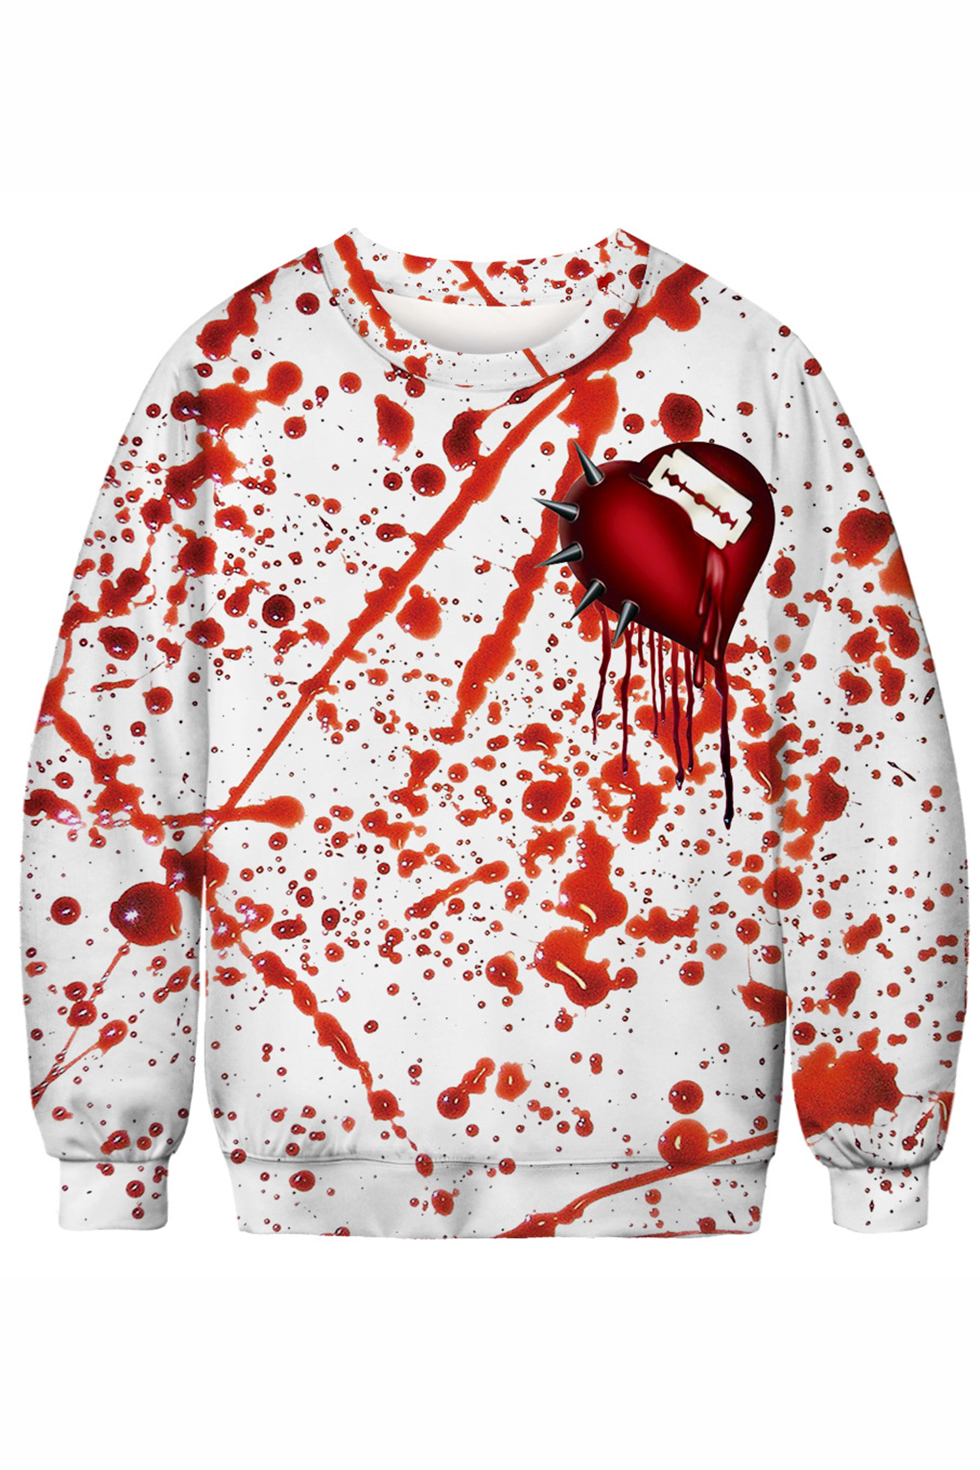 2019New Blood Splatter Halloween 3D Print unisex Round Neck Long Sleeve Sweater